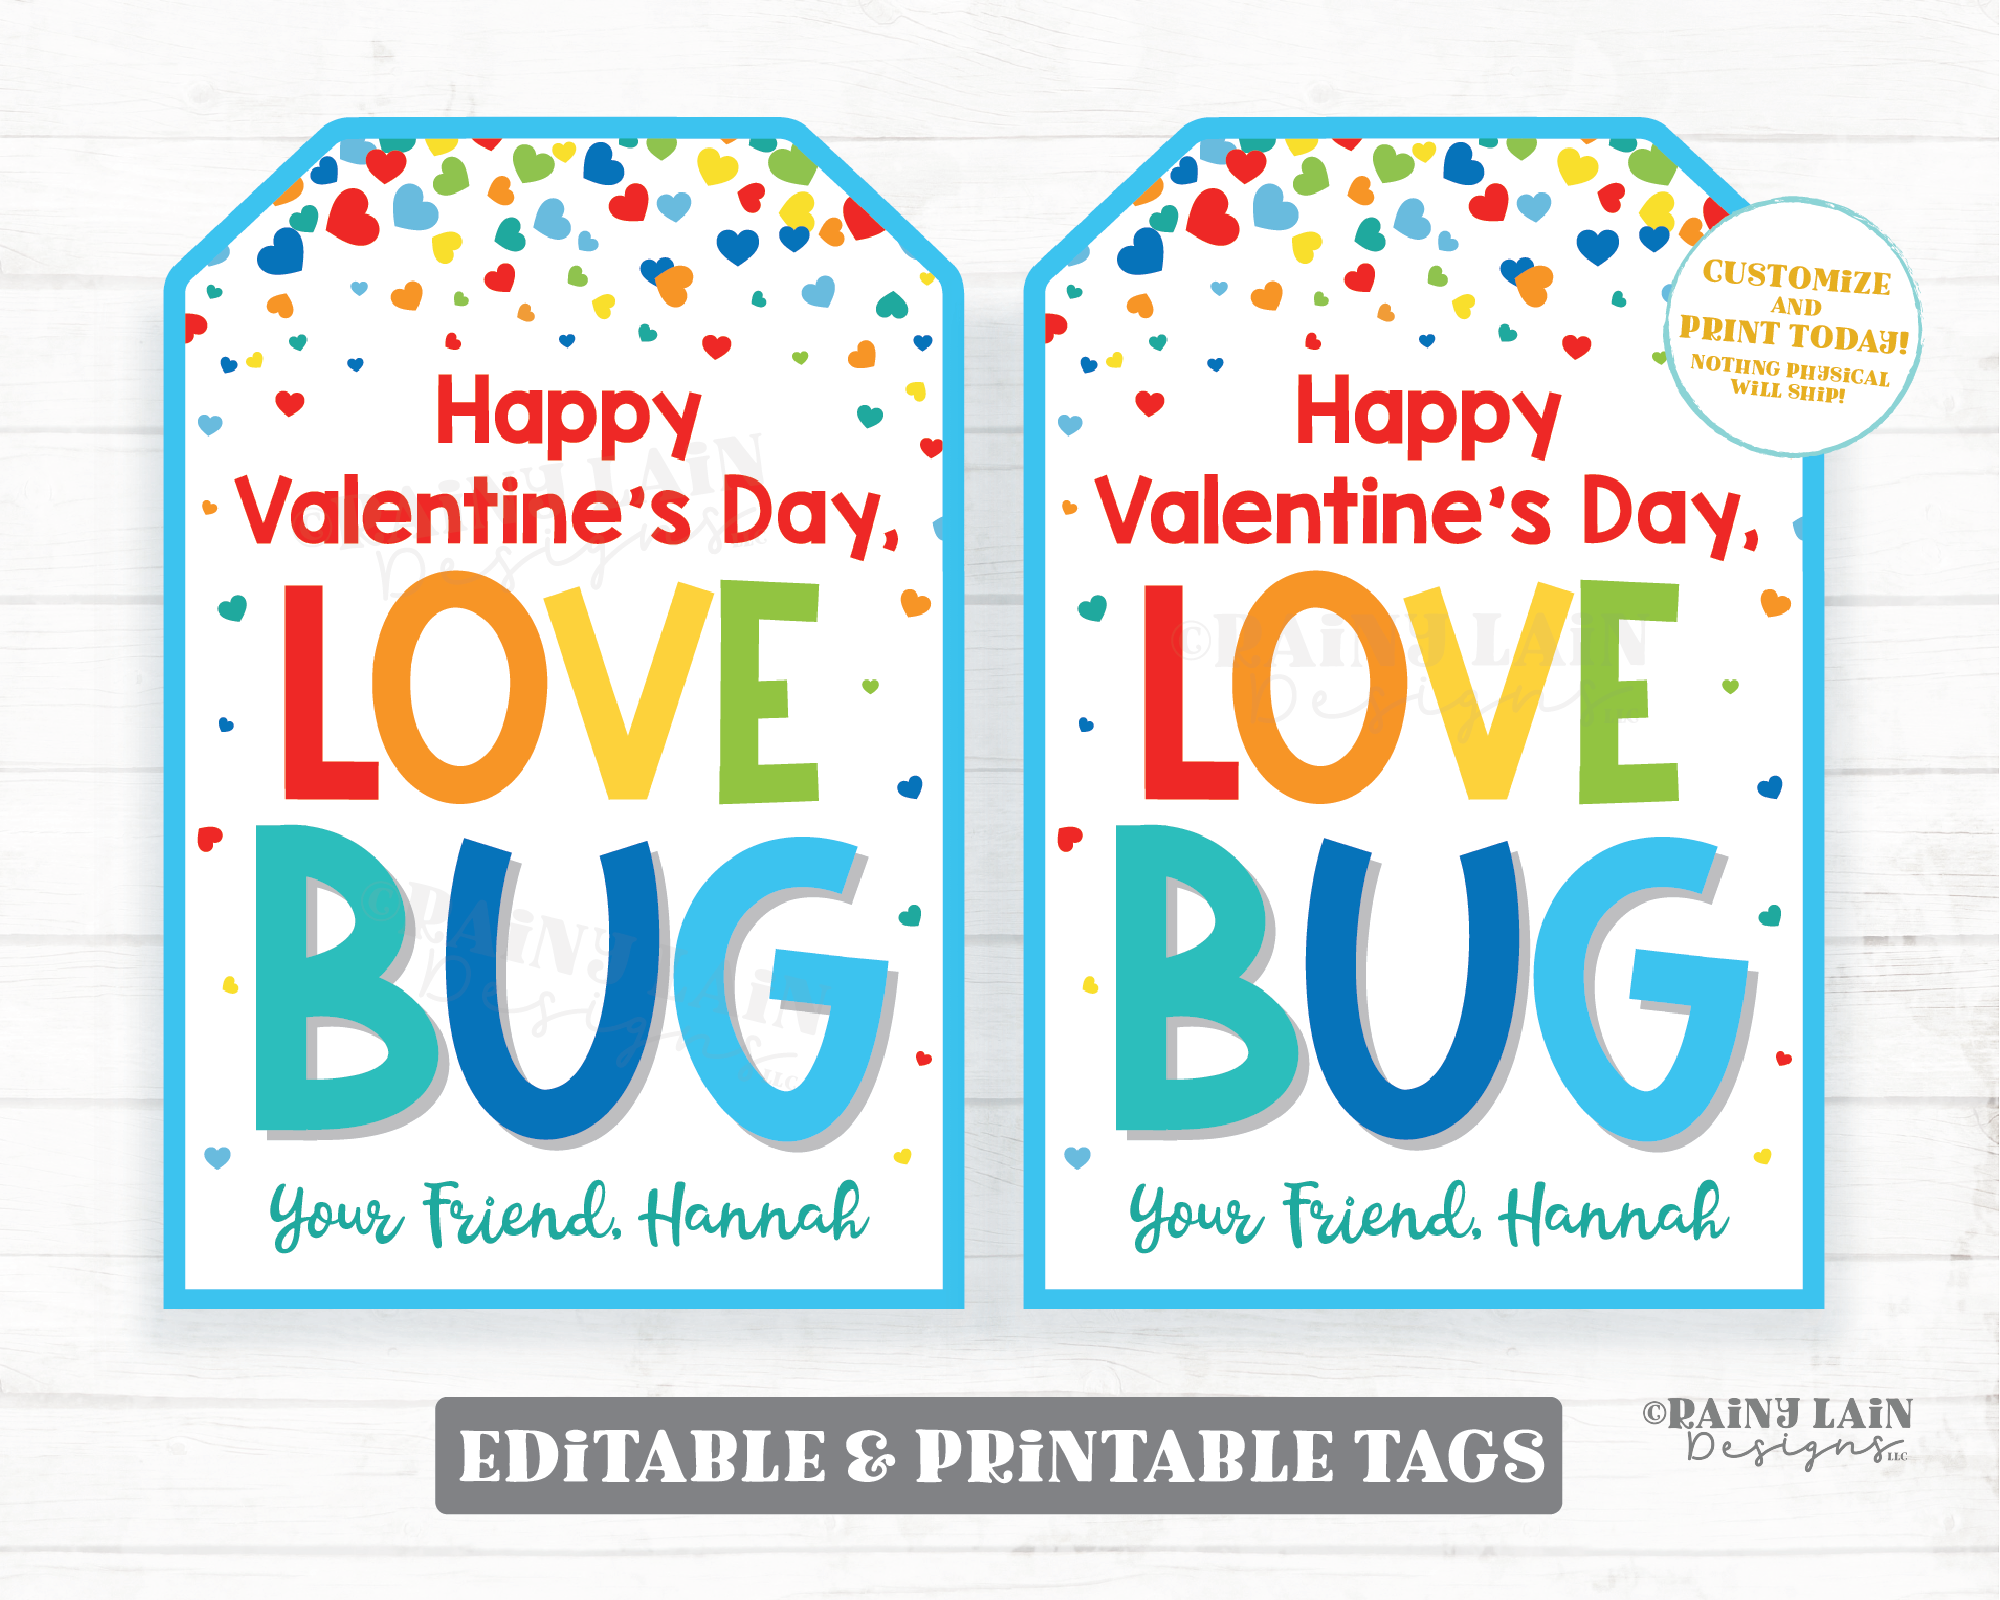 Happy Valentine's Day Love Bug Tag Caterpillar Ladybug Worm Preschool Classroom Friend Printable Kids Non-Candy Valentine Favor Gift Tag